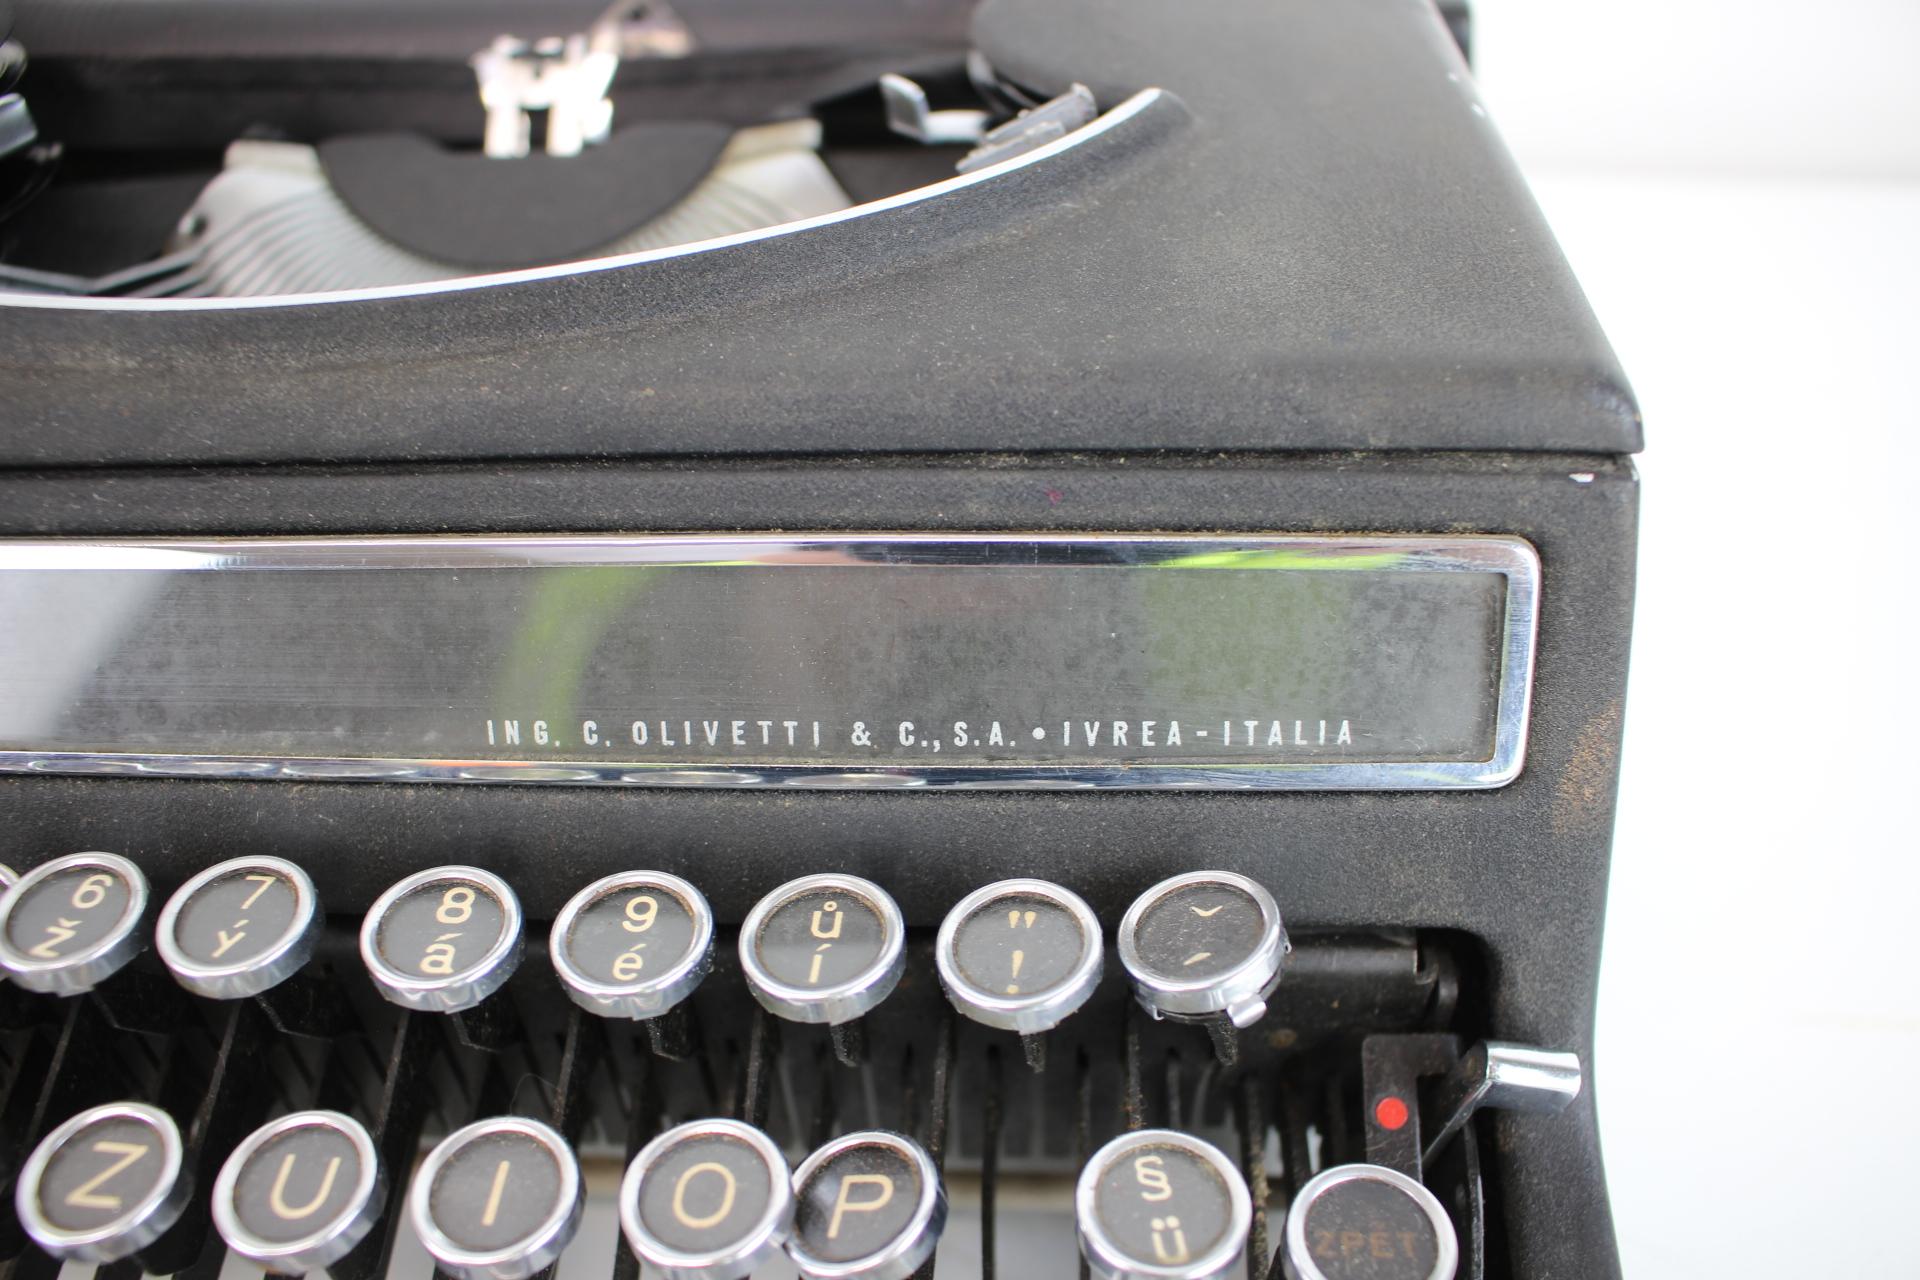  Typewriter/  Olivetti Studio 42, Italy 1946 For Sale 2